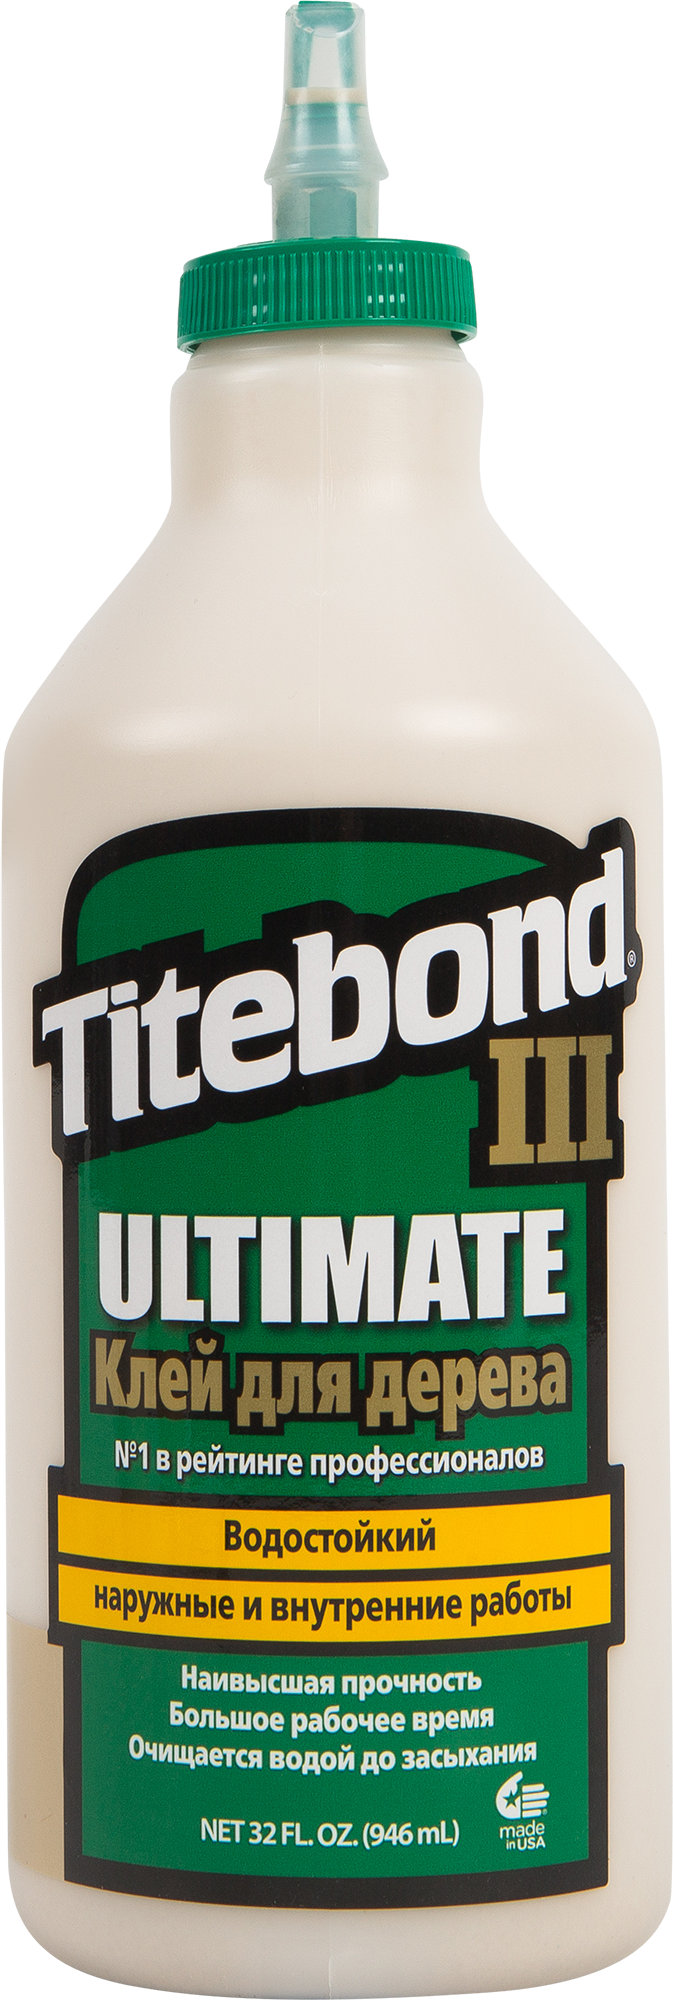 Купить клей тайтбонд. Клей Titebond Ultimate III Wood Glue,влагостойкий, 946 мл. Клей Titebond III Ulimate 1415. Клей Titebond III Ulimate. Клей повышенной влагостойкости Titebond III Ultimate.